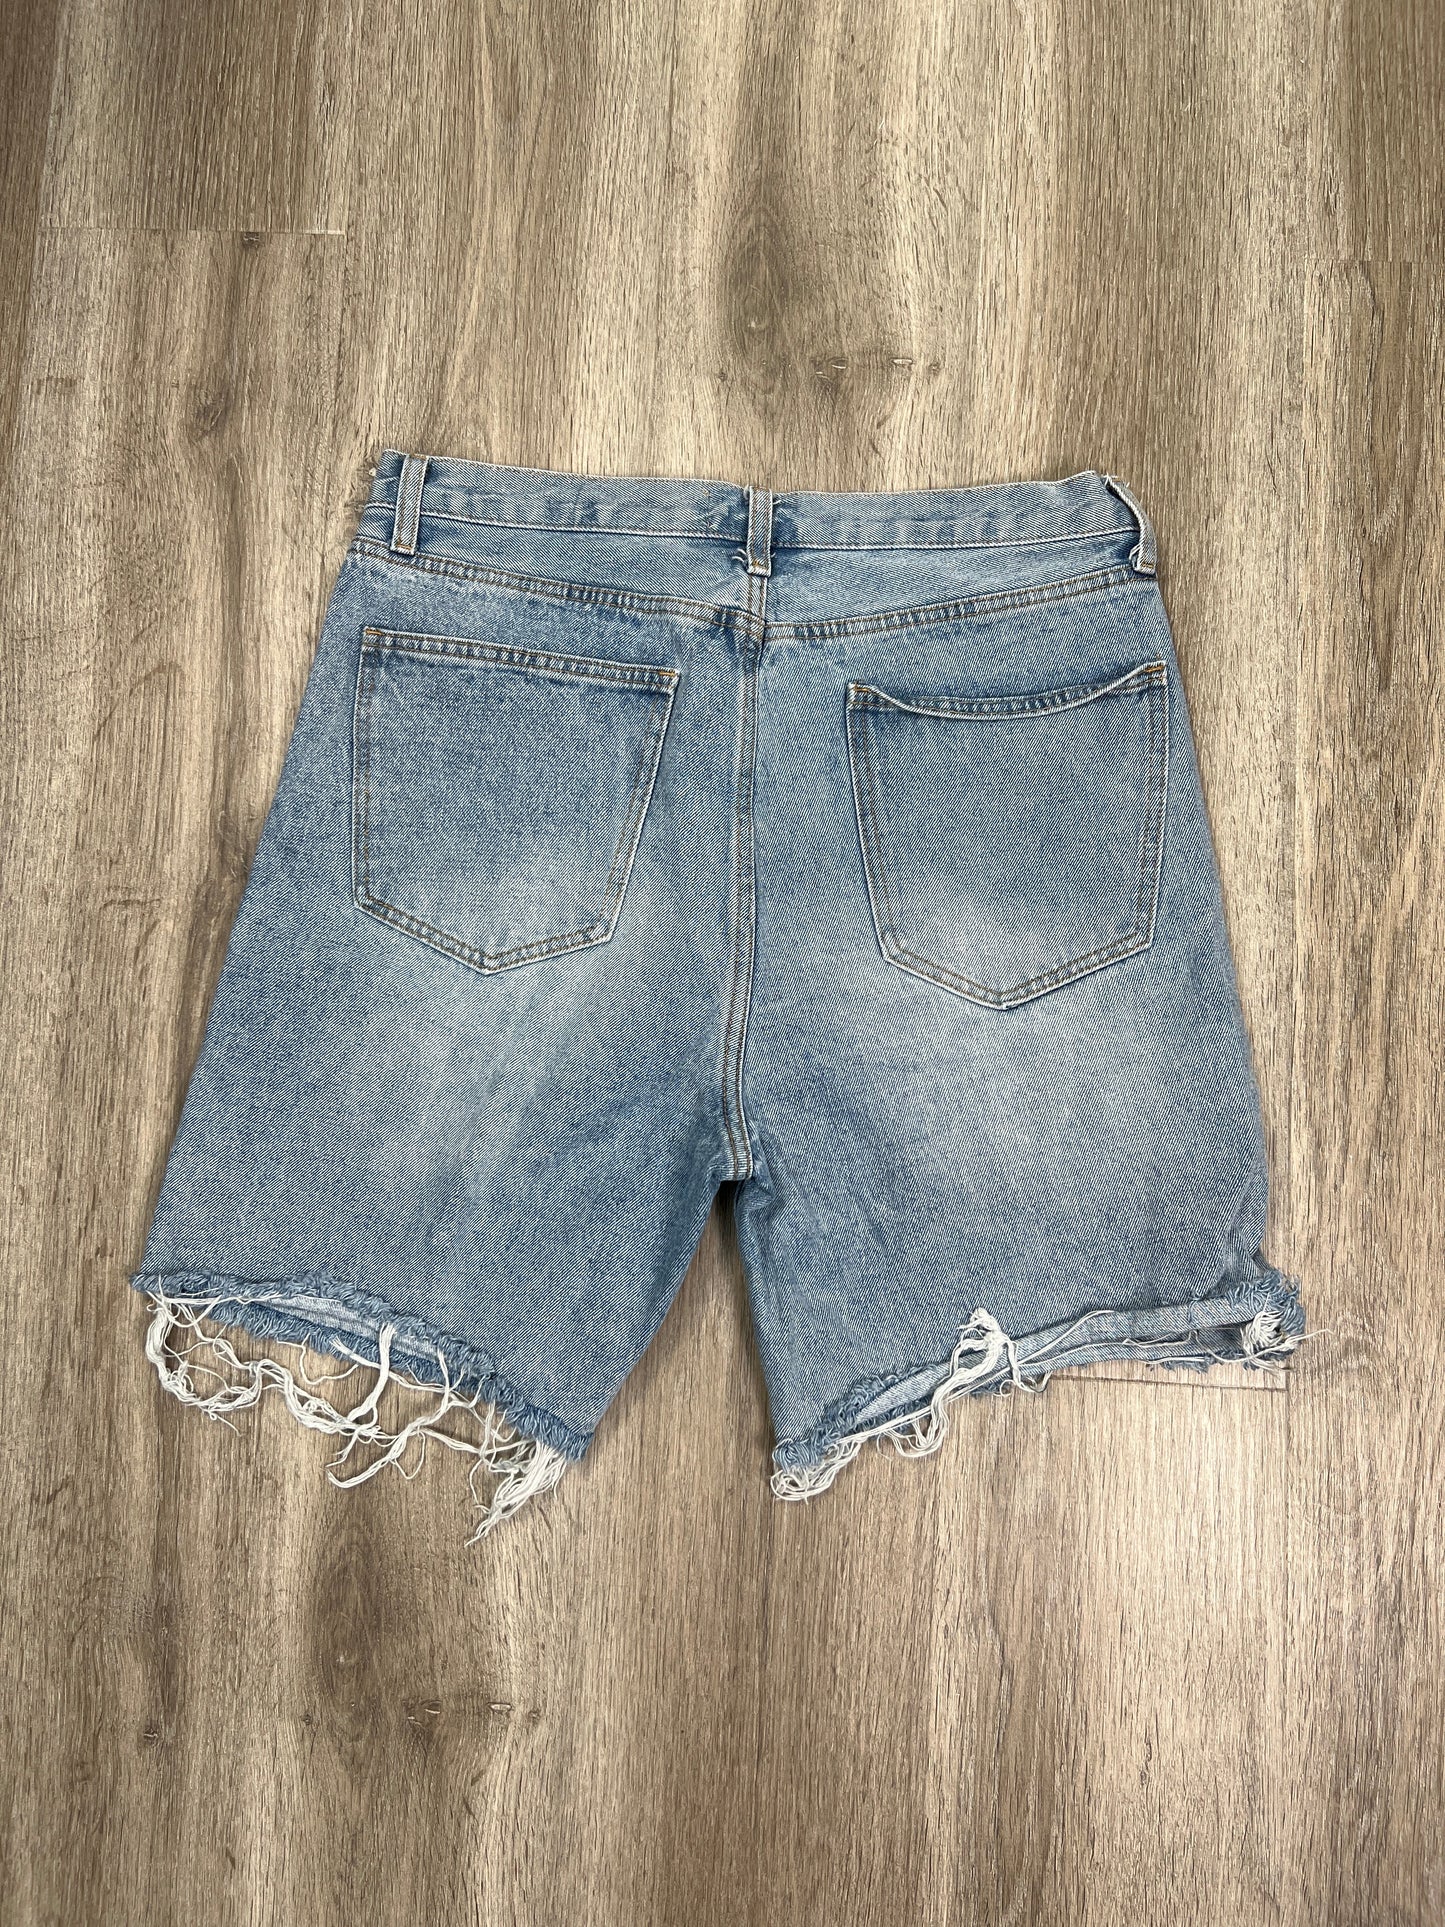 Shorts By Wishlist  Size: L